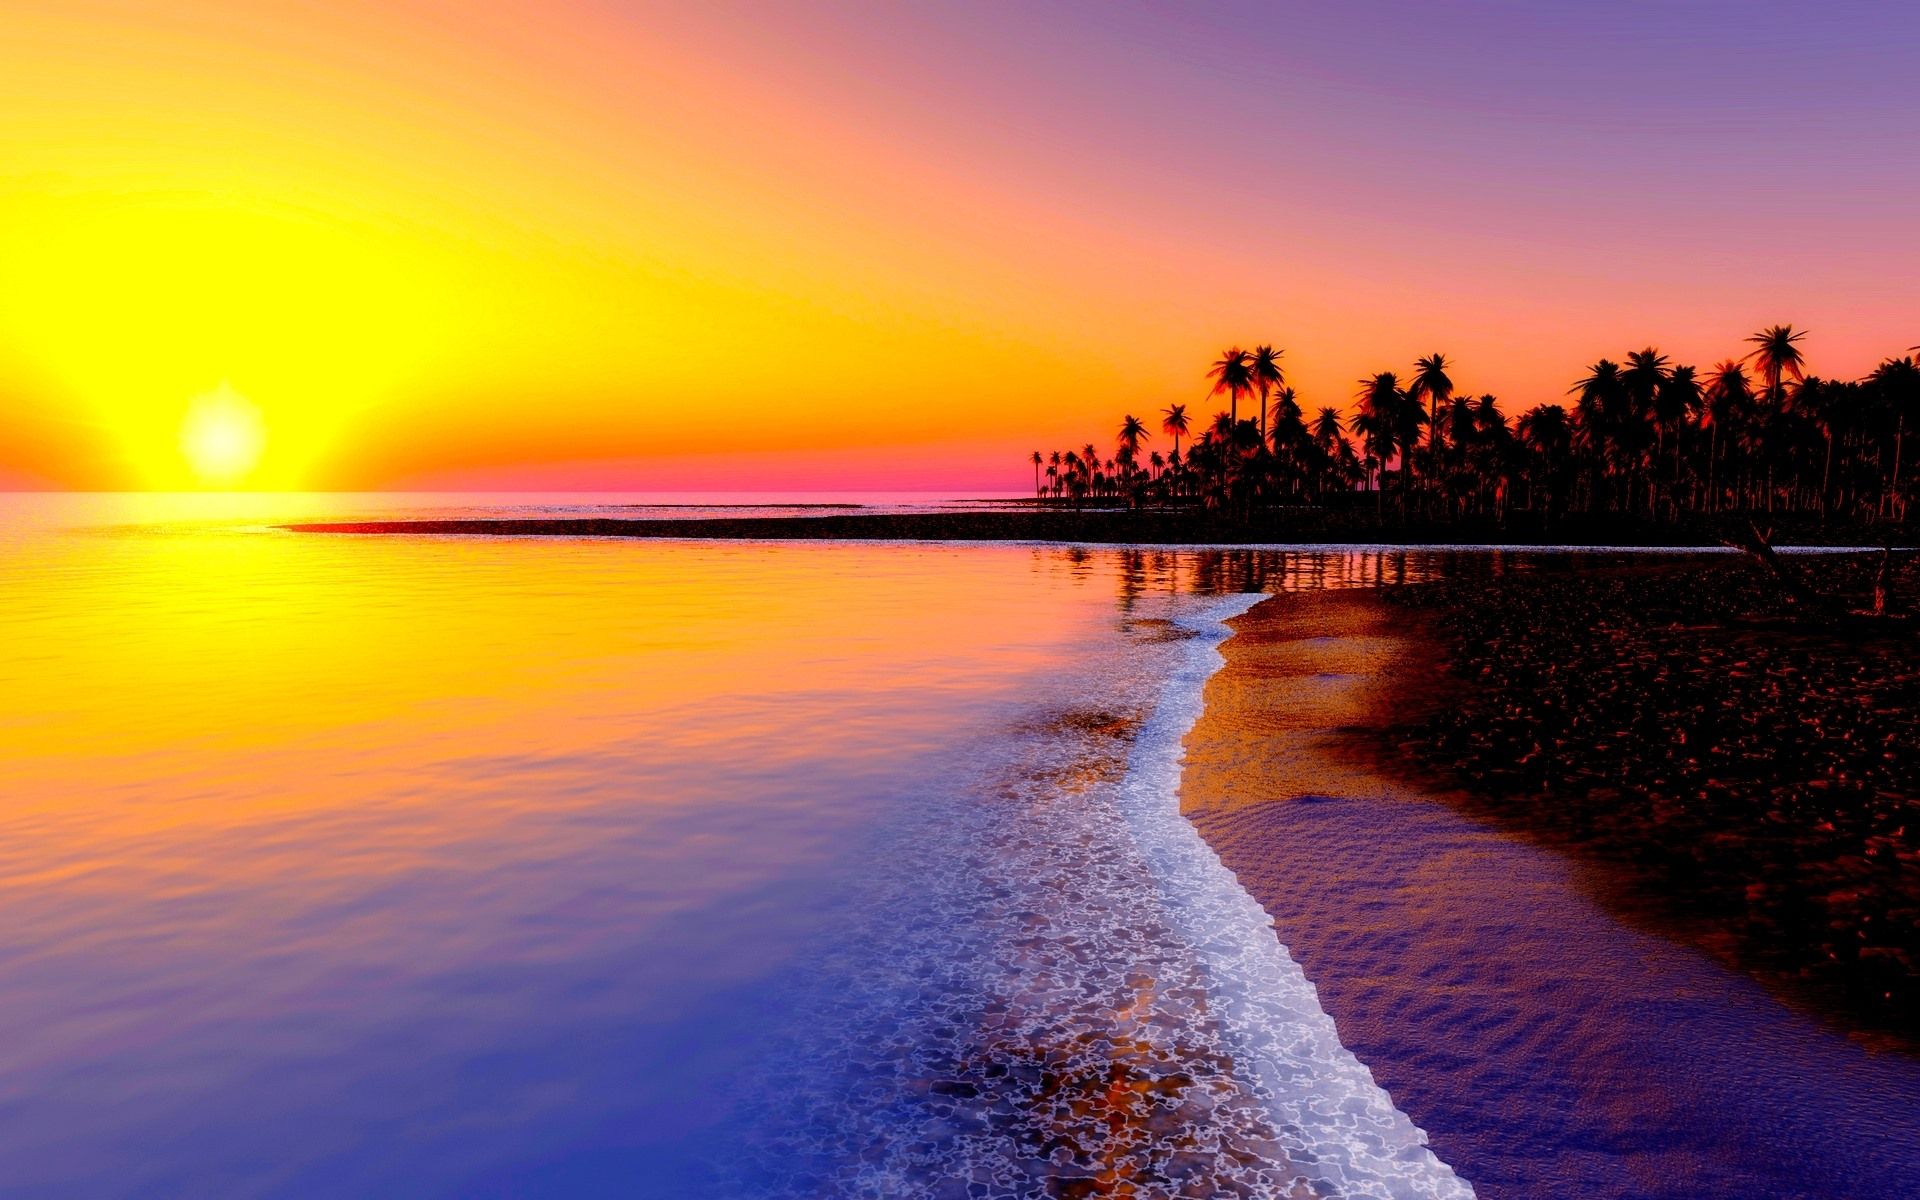  Sonnenuntergang Hintergrundbild 1920x1200. Wunderschöner Sonnenuntergang, Meer, Wellen, Strand, Palmen, Sonne 1920x1200 HD Hintergrundbilder, HD, Bild